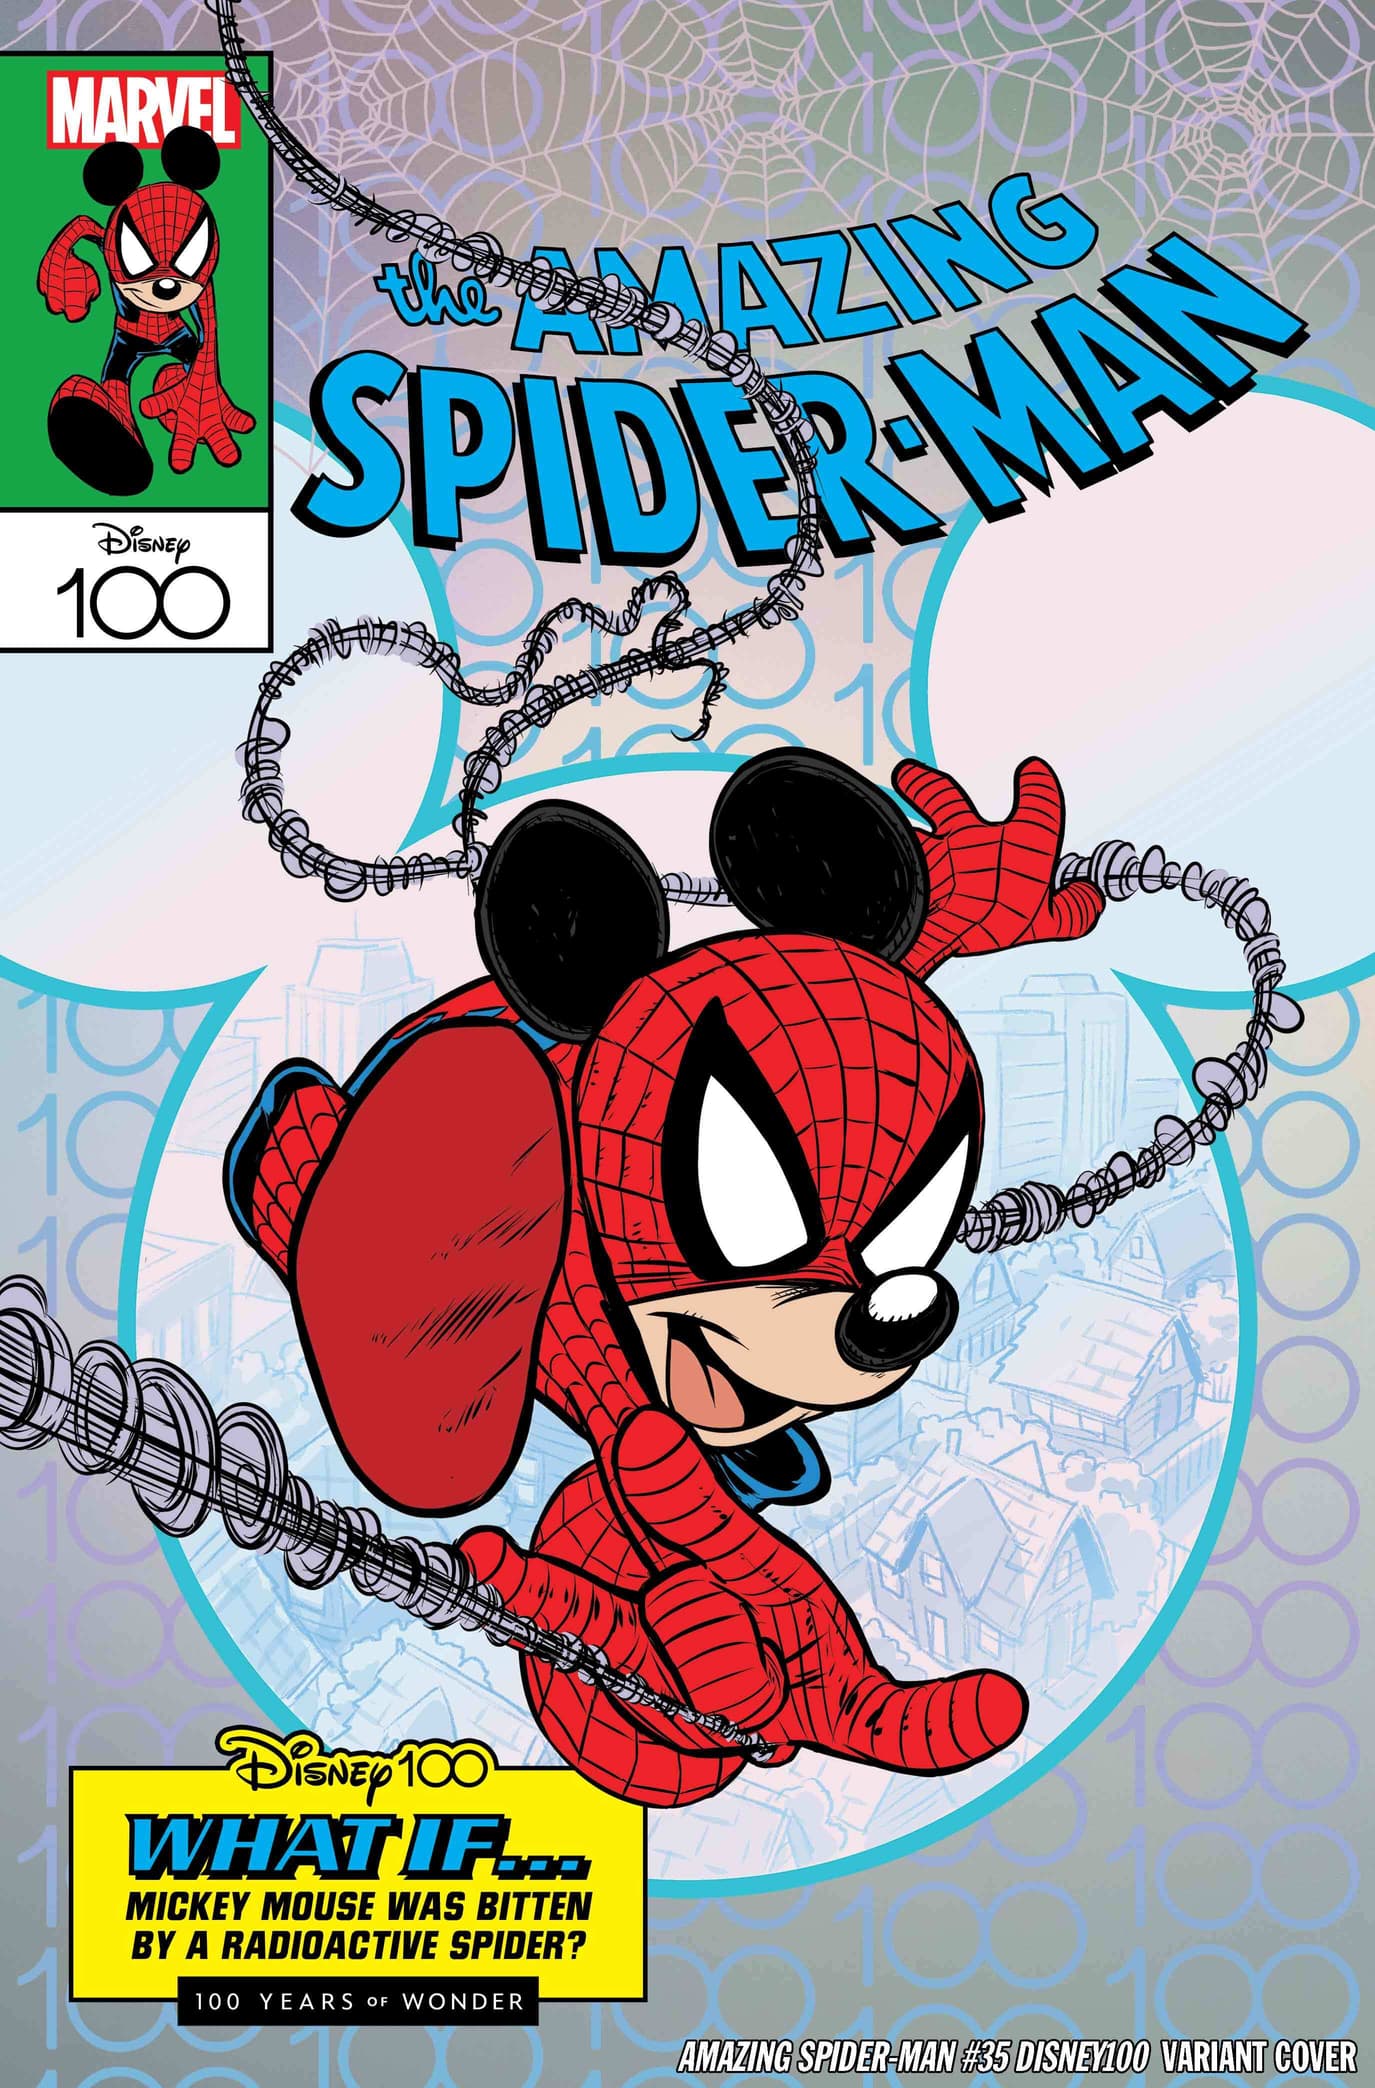 AMAZING SPIDER-MAN #35 Disney100 Variant Cover by Claudio Sciarrone